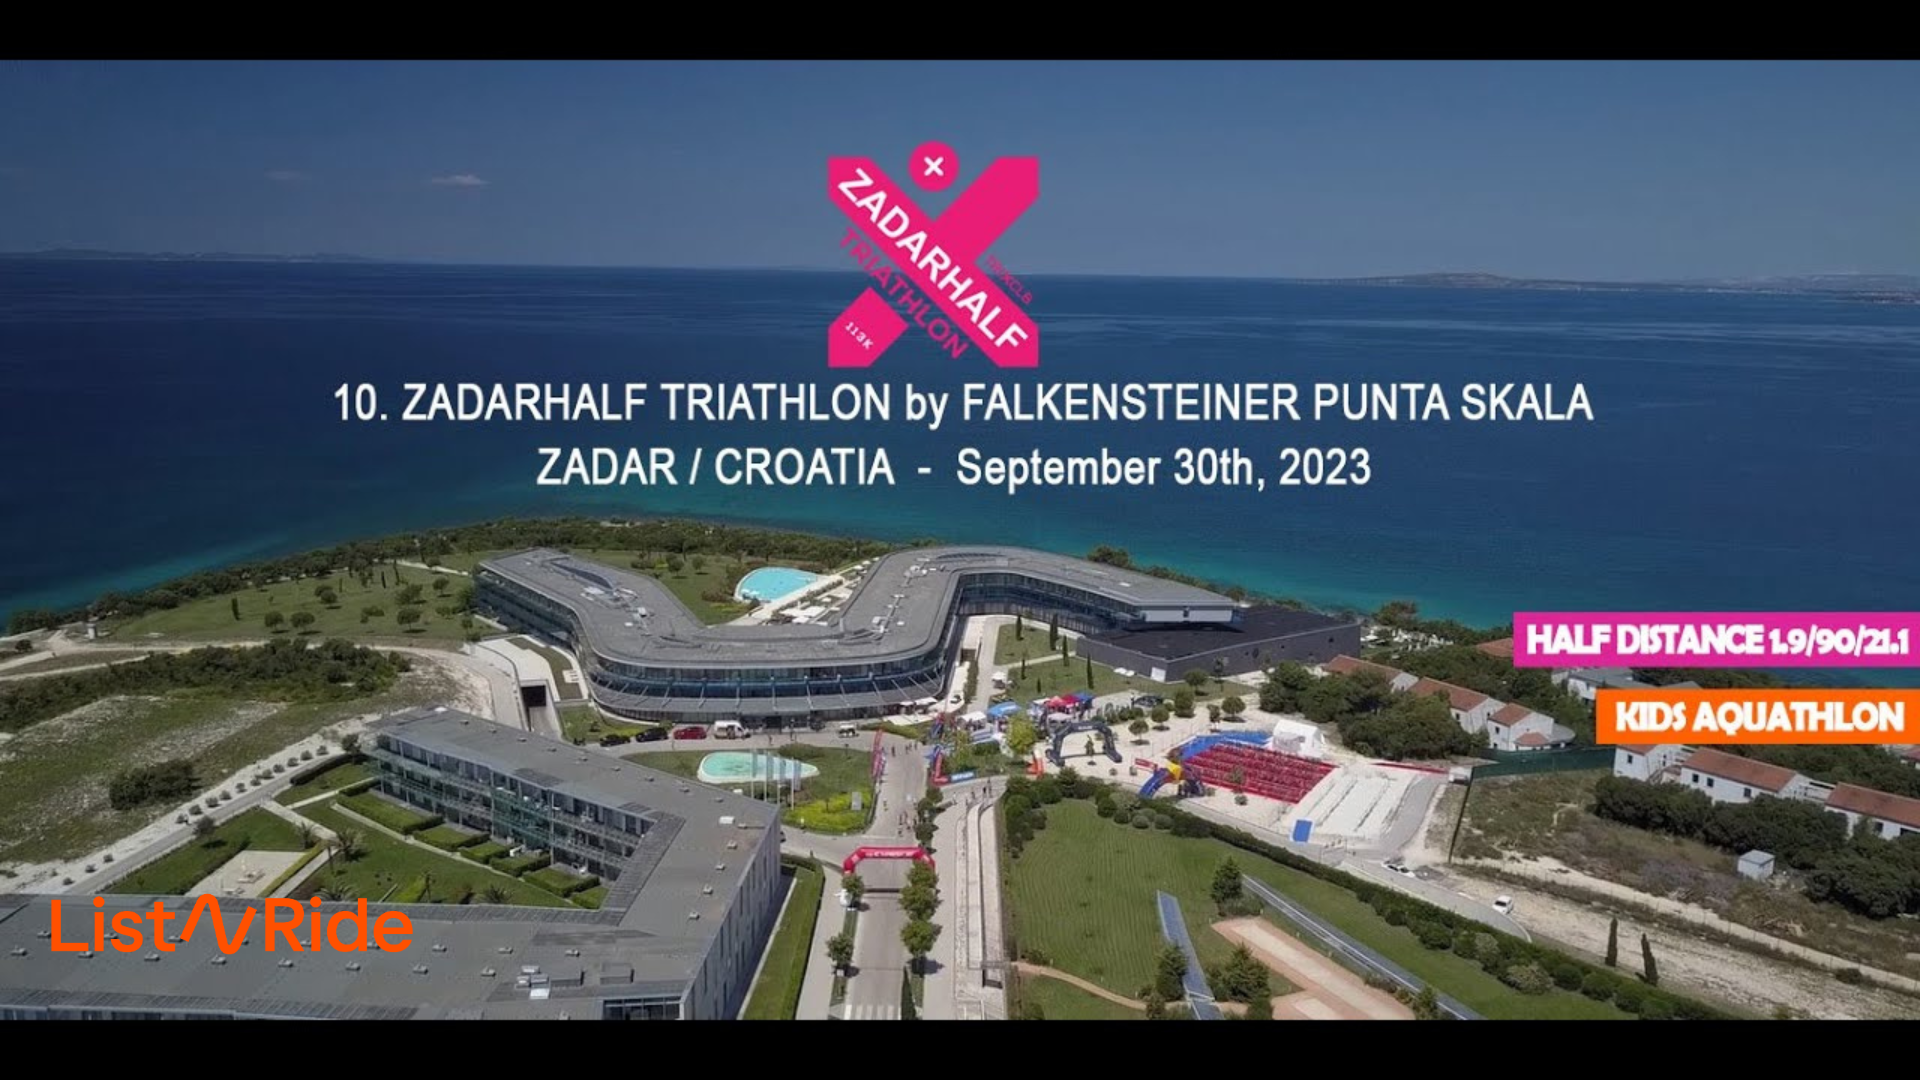 10th Zadarhalf Triathlon 2023 cover image